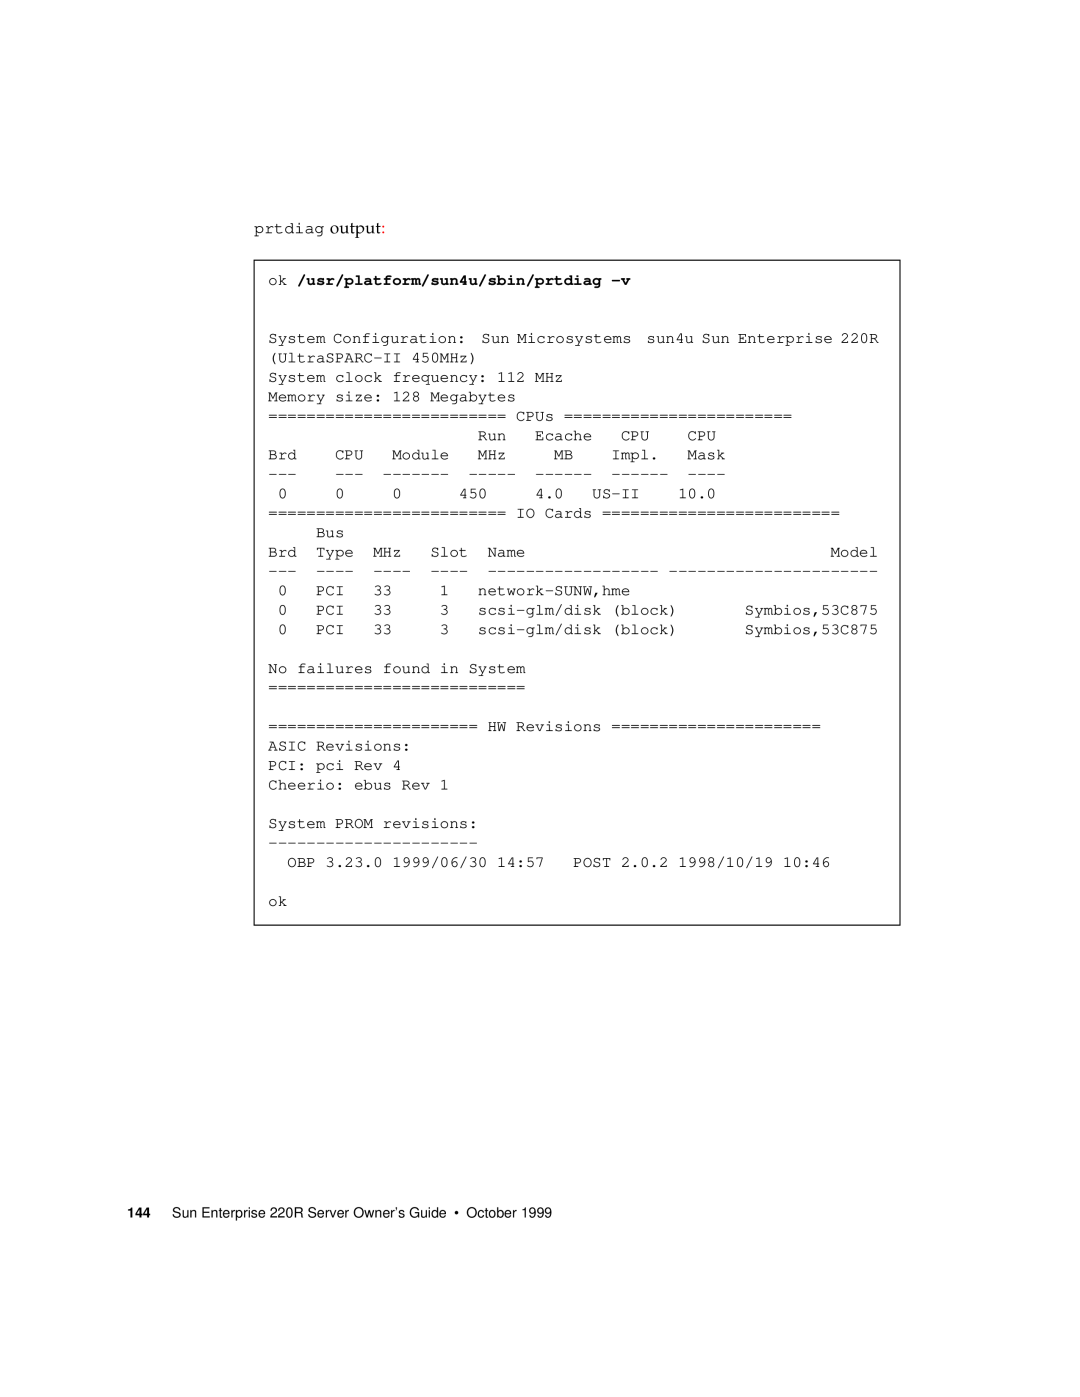 Sun Microsystems 220R manual prtdiag output, ok /usr/platform/sun4u/sbin/prtdiag 